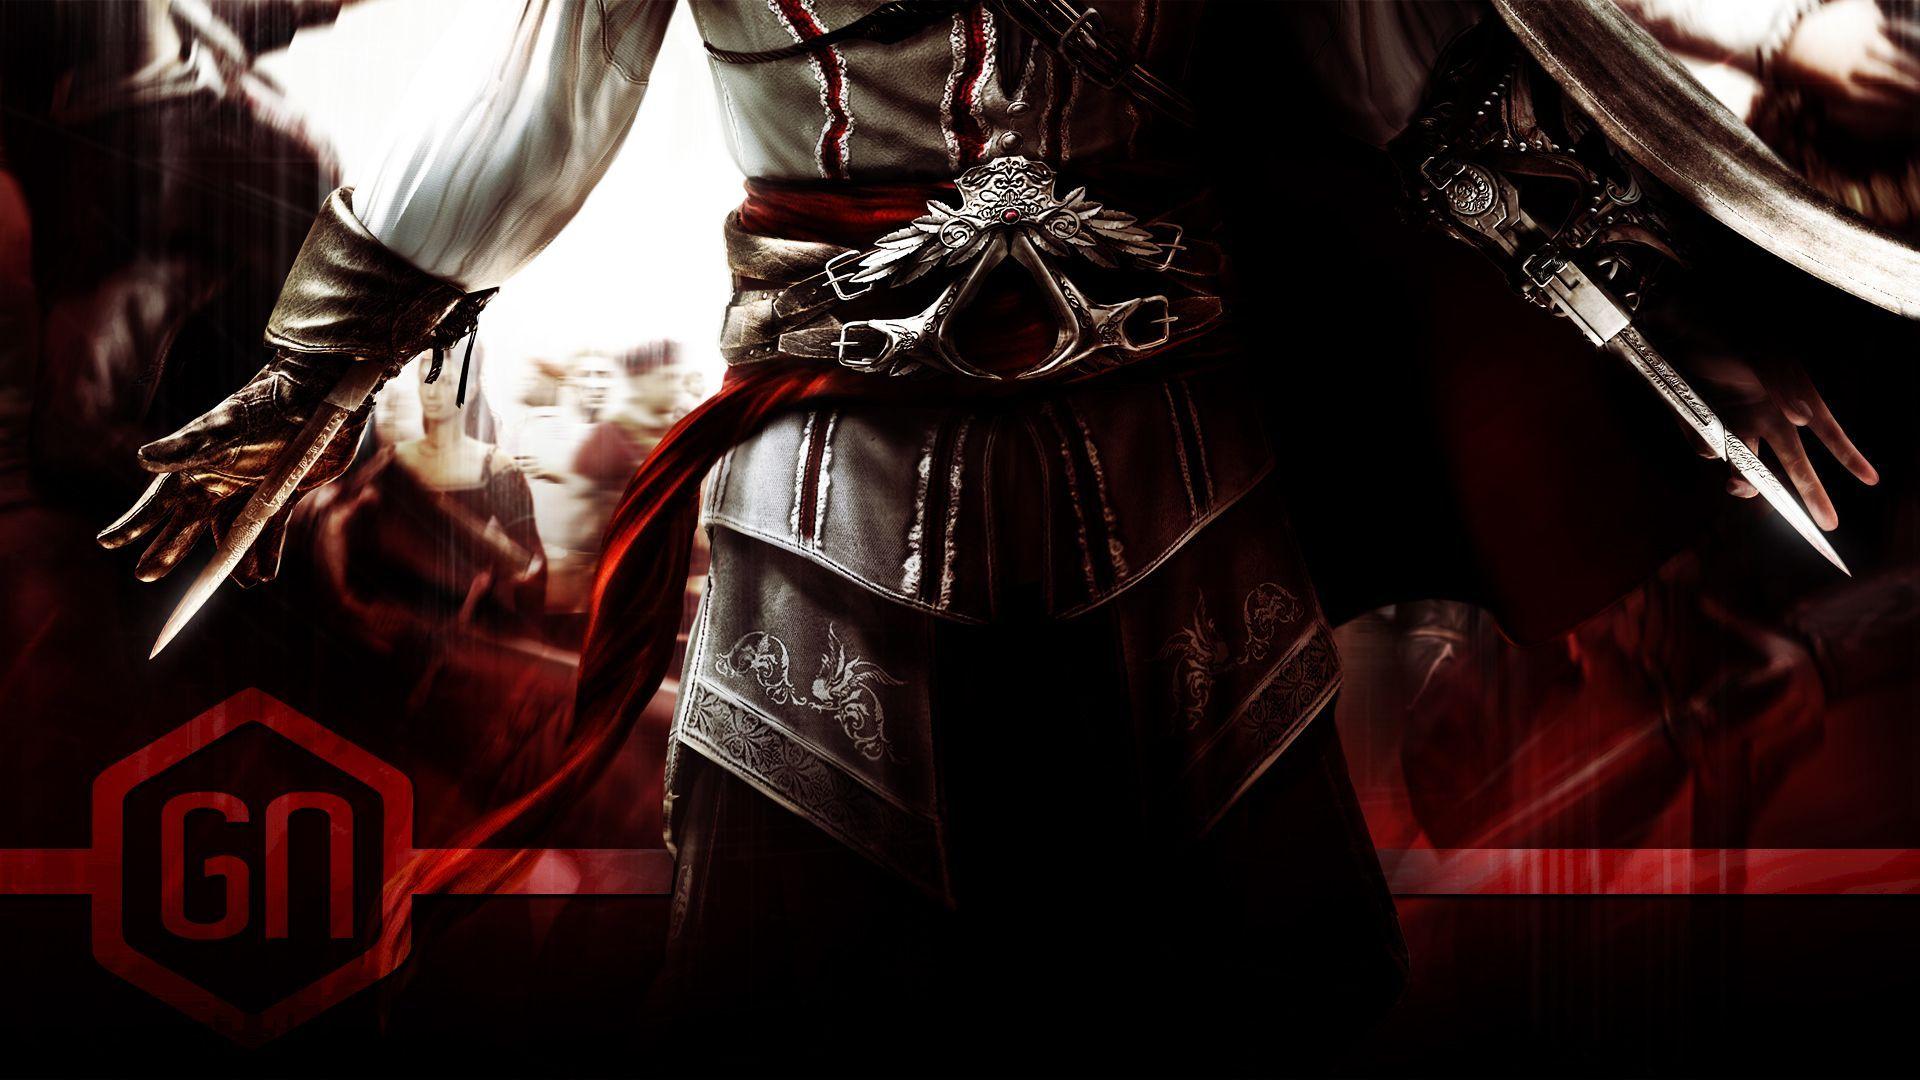 Assassin's Creed 2 Ezio Auditore wallpaper. Ezio Auditore da